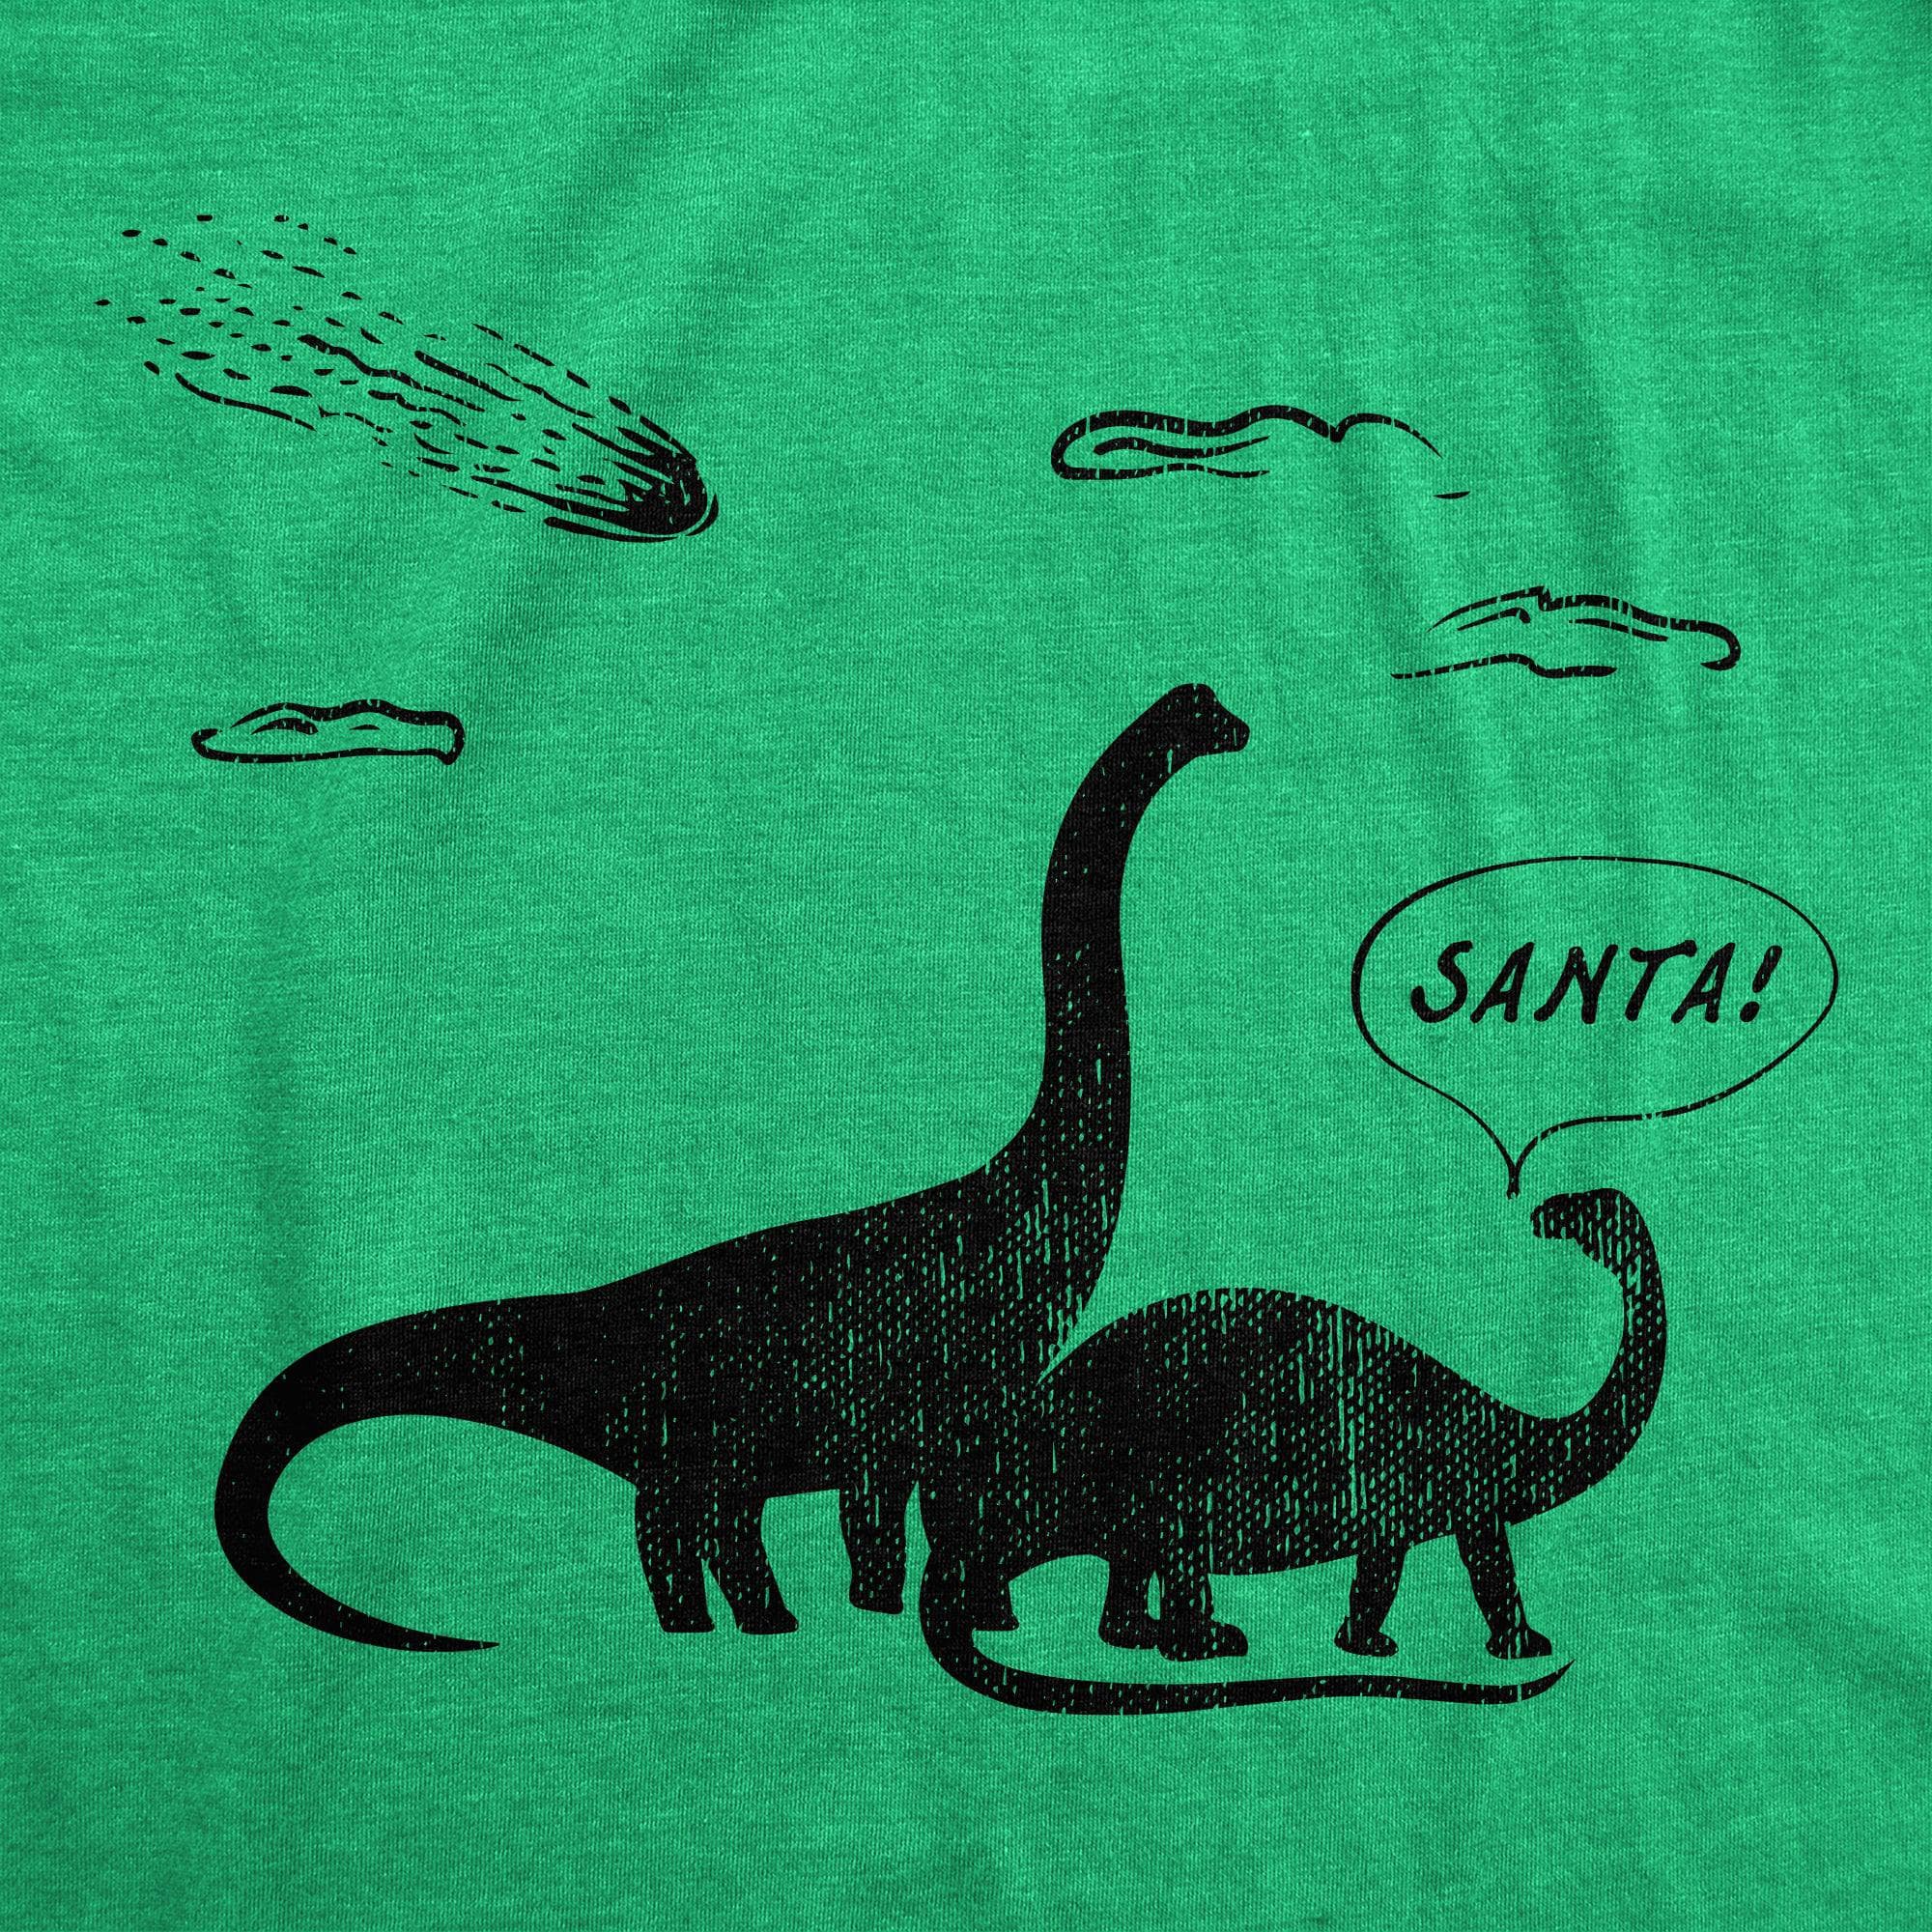 Santa Dinosaurs Women's Tshirt  -  Crazy Dog T-Shirts